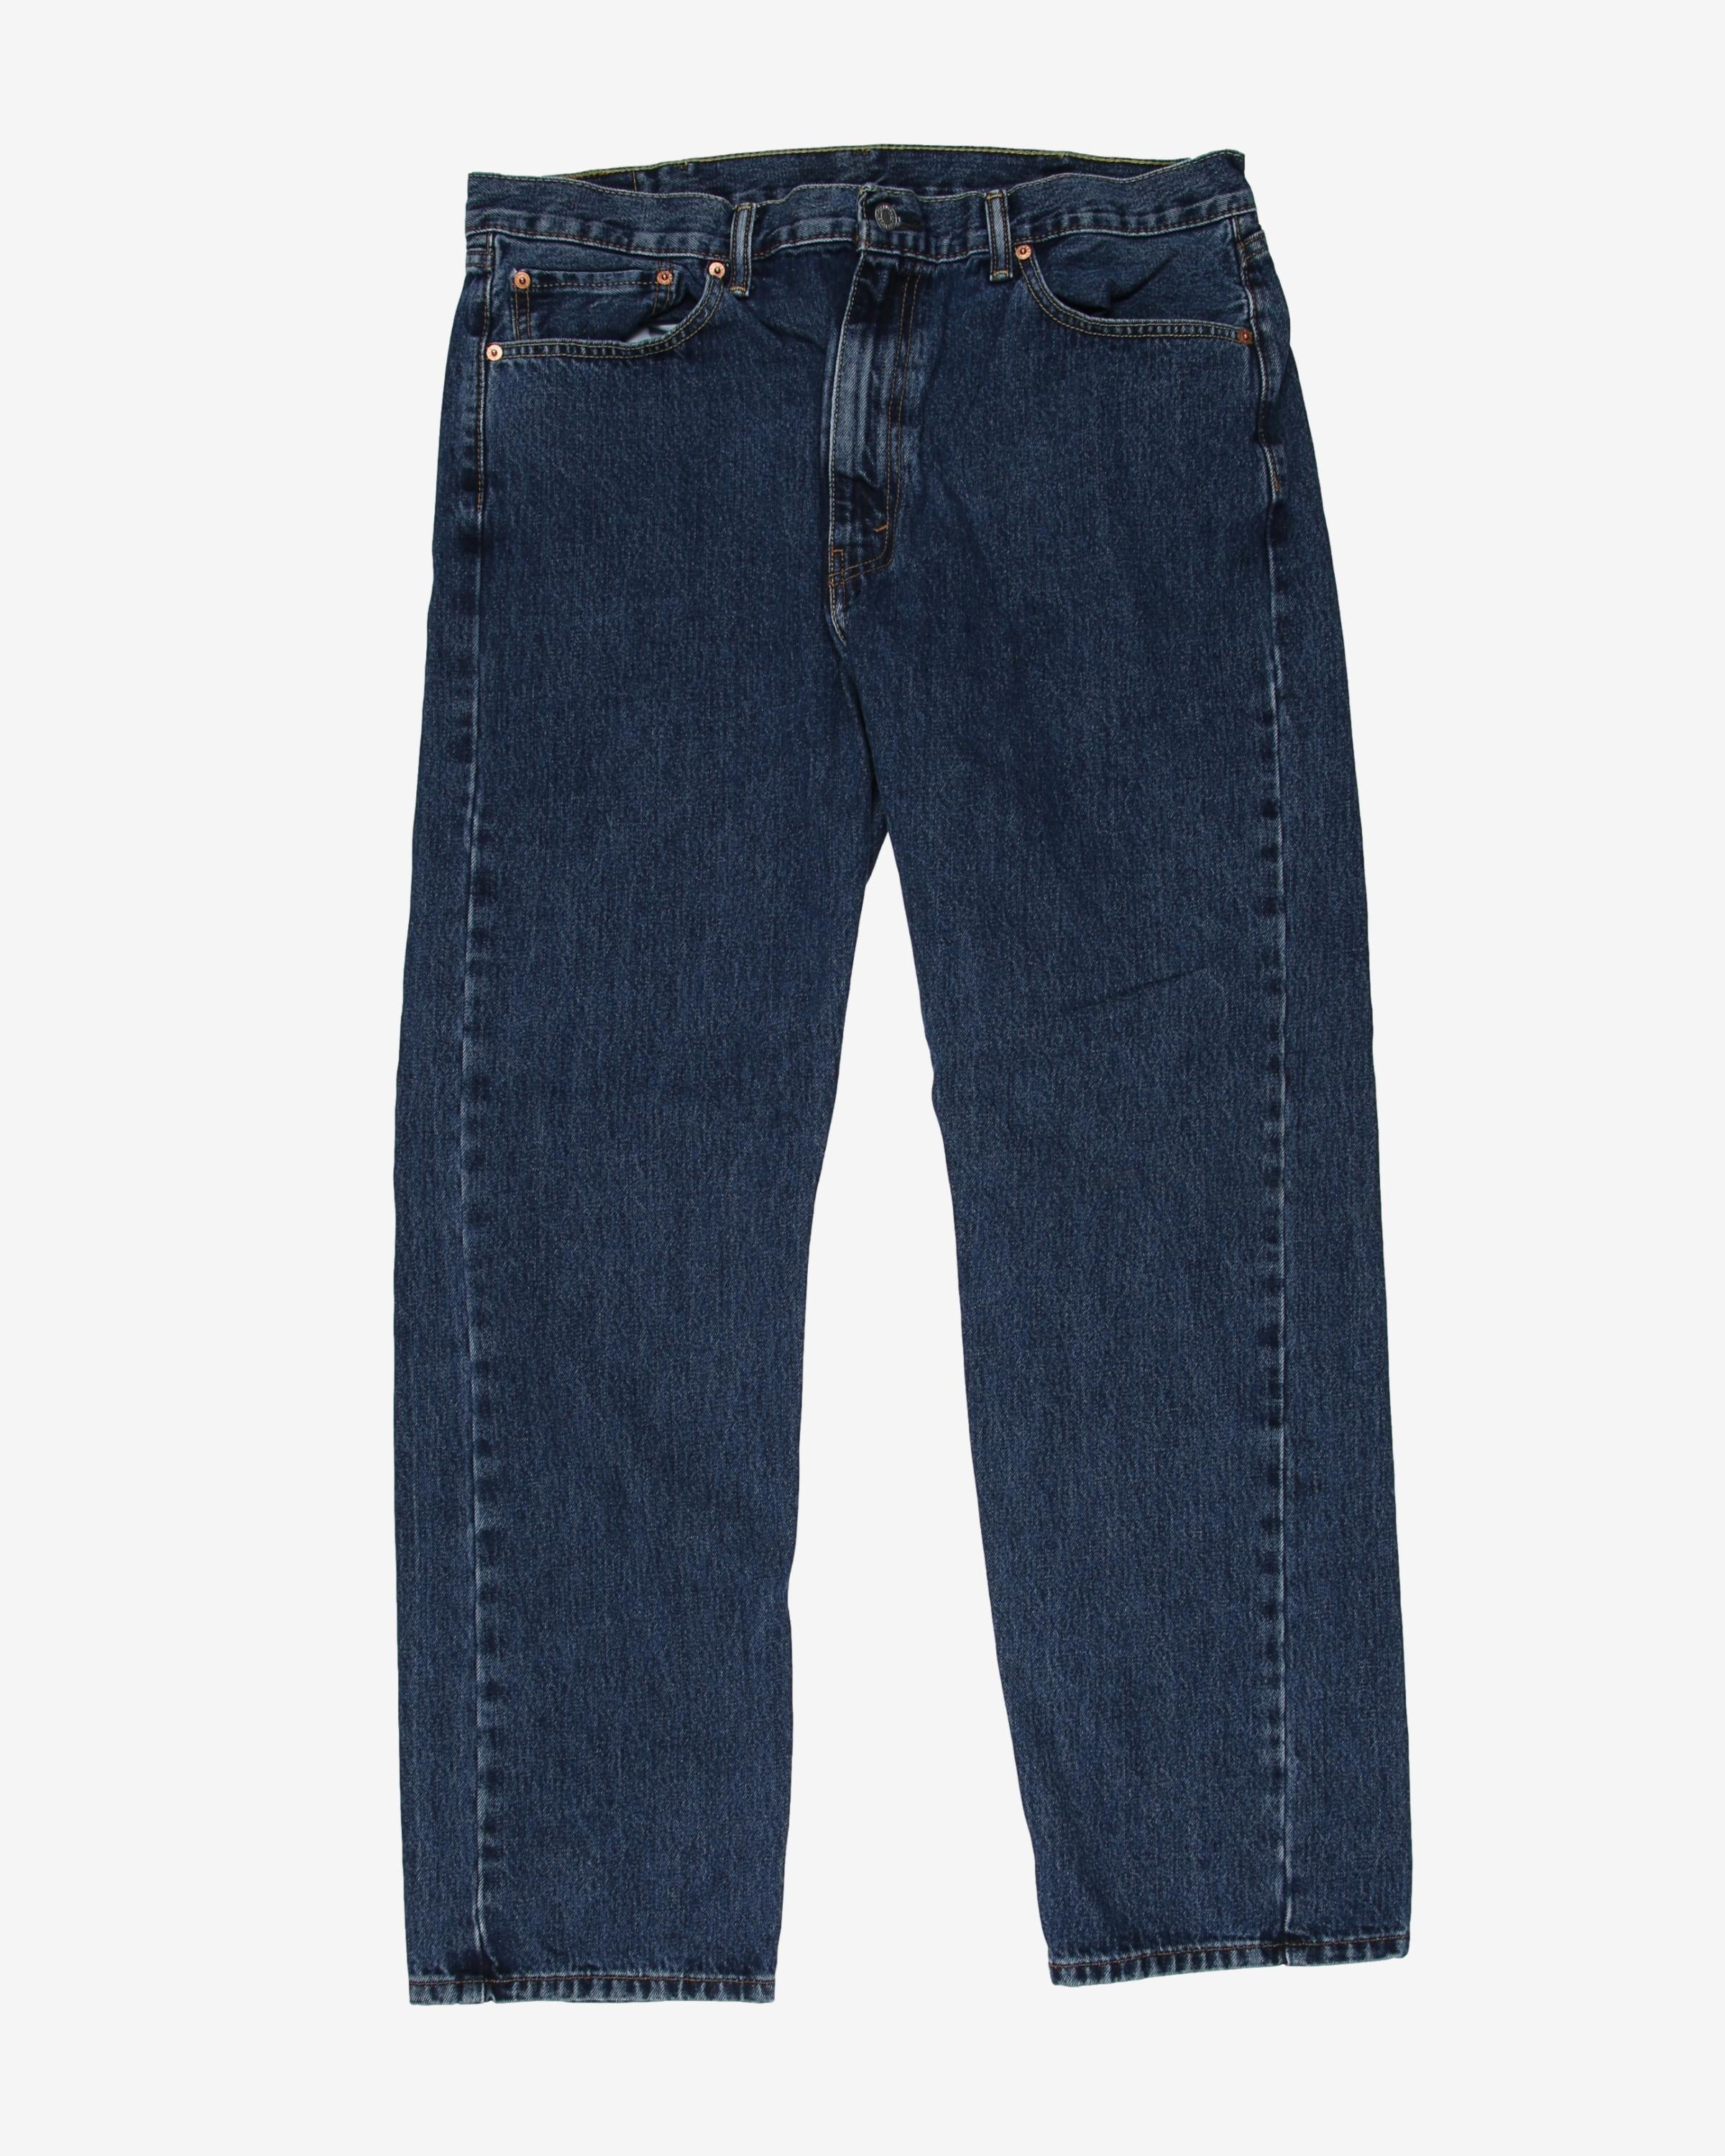 Levi's 505 Dark Blue / Navy Casual Denim Jeans - W39 L32